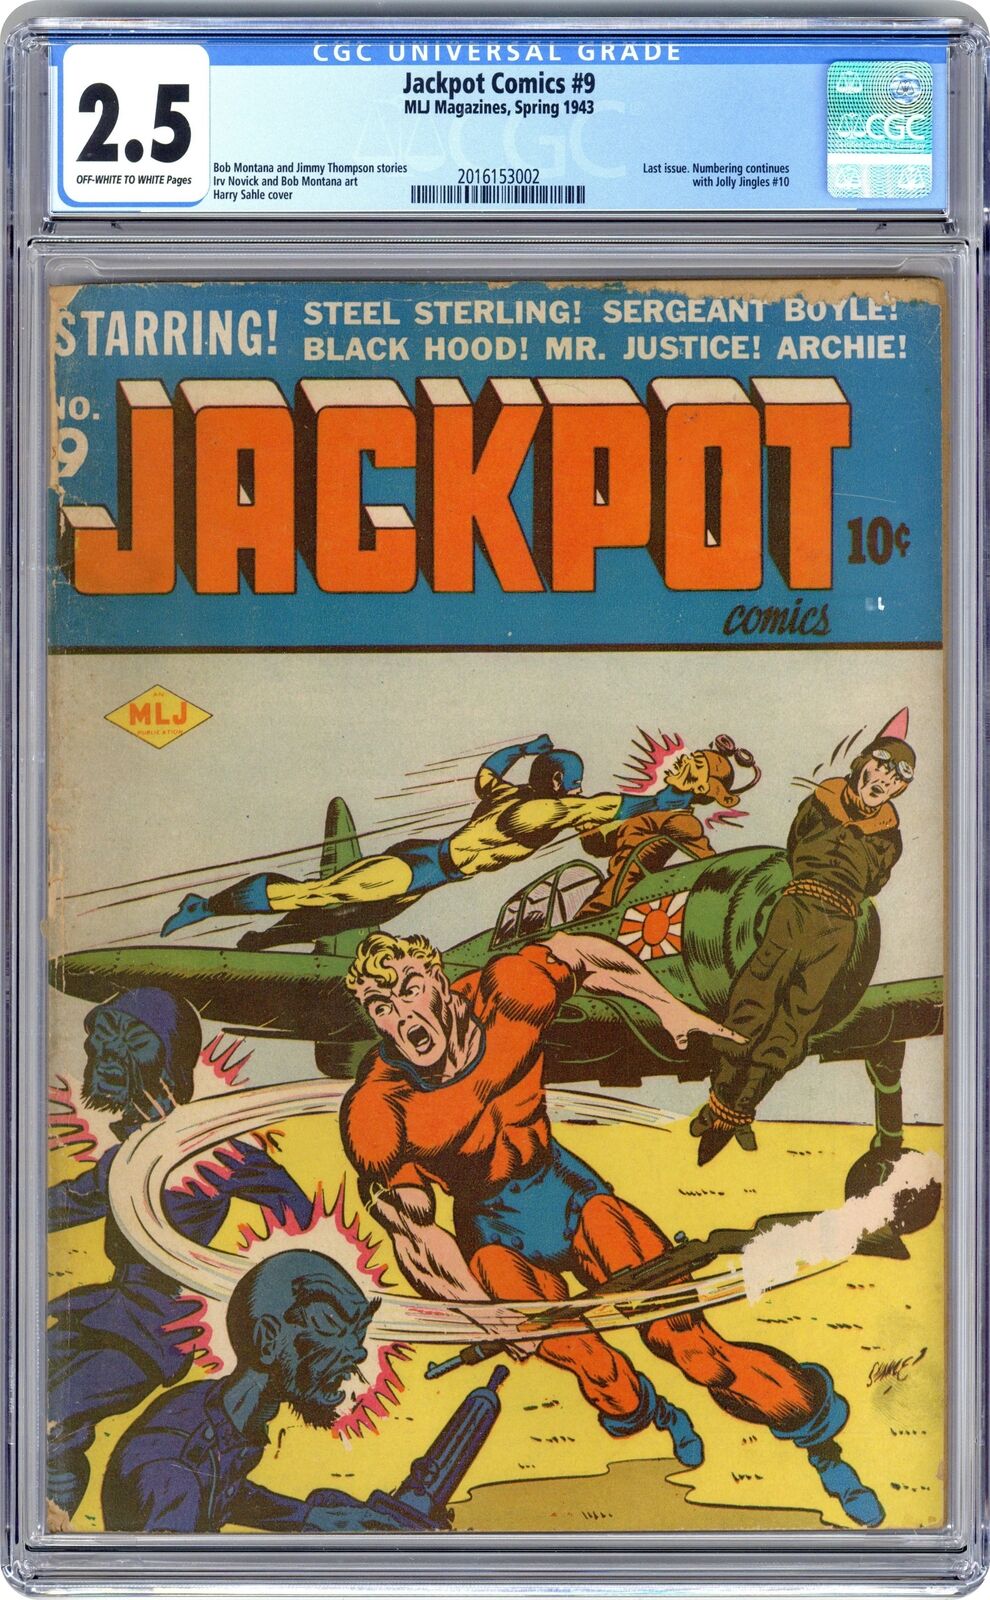 Jackpot Comics #9 CGC 2.5 1943 2016153002